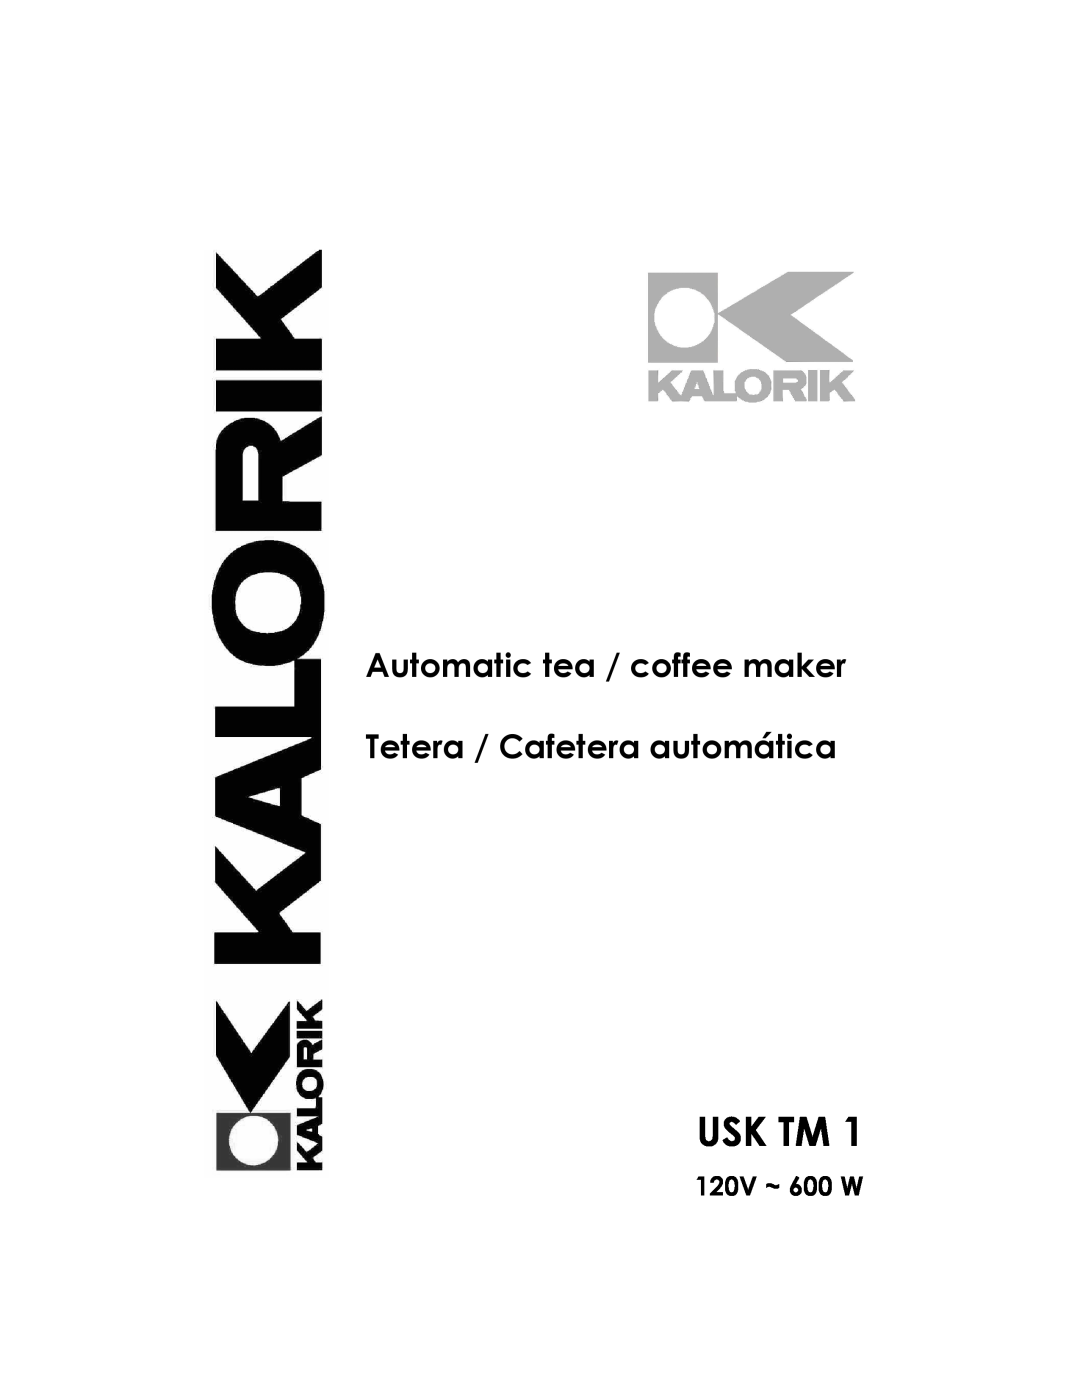 Kalorik usktm1 manual Usk Tm, 120V ~ 600 W, Automatic tea / coffee maker, Tetera / Cafetera automática 